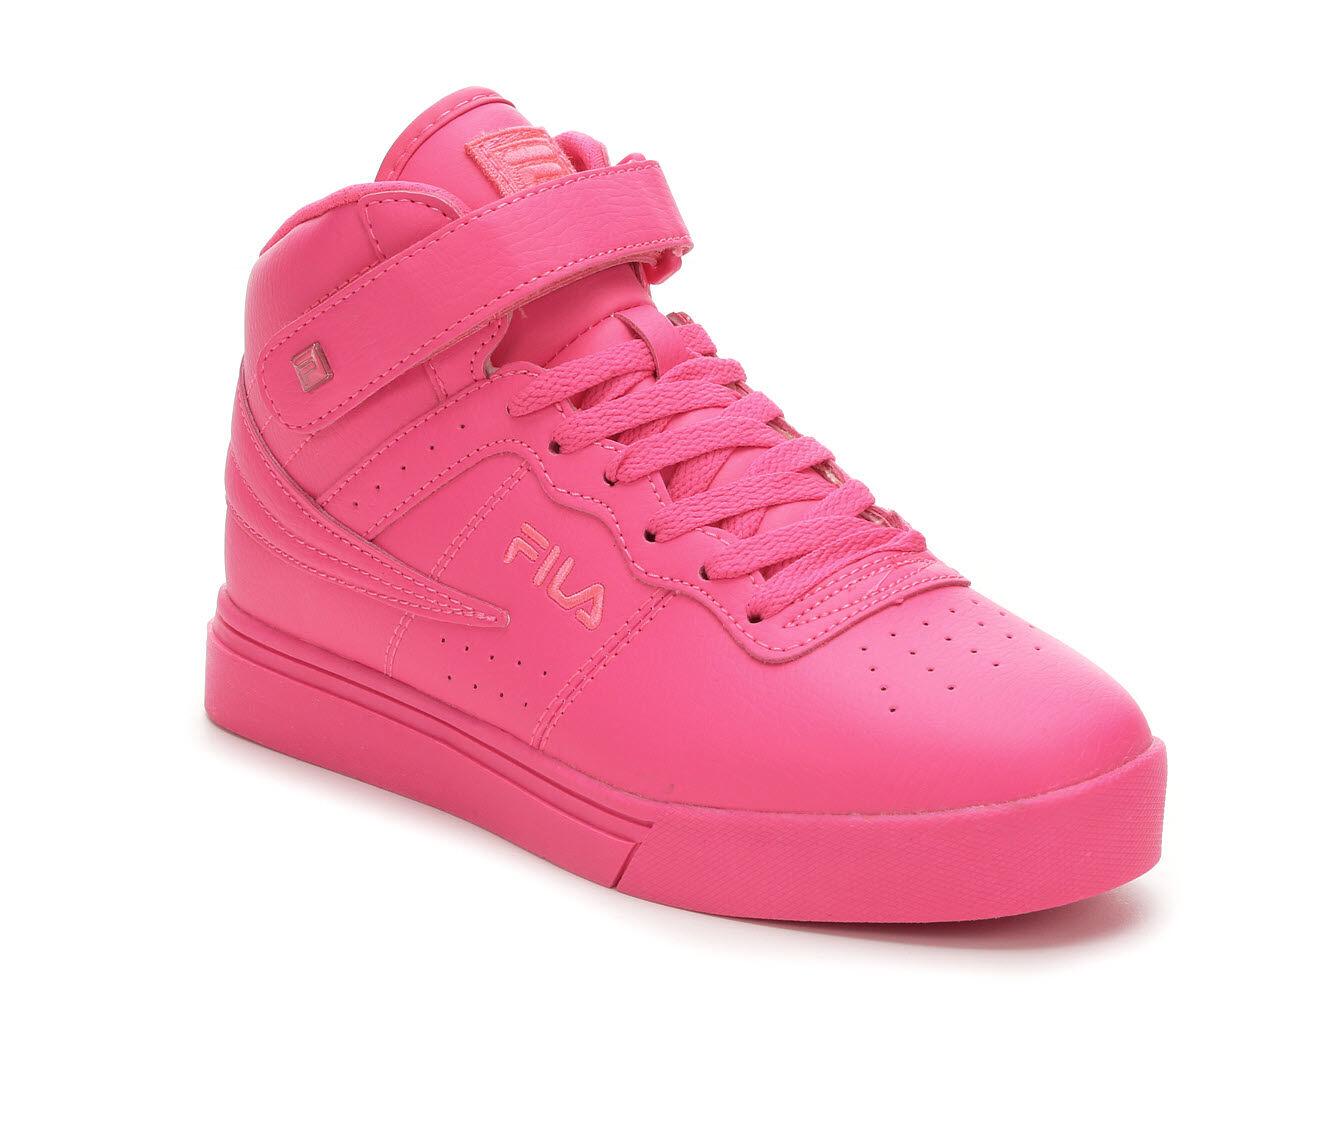 Fila Rubber Vulc 13 Mp Metallic Stars Athletic Shoe in Pink - Lyst